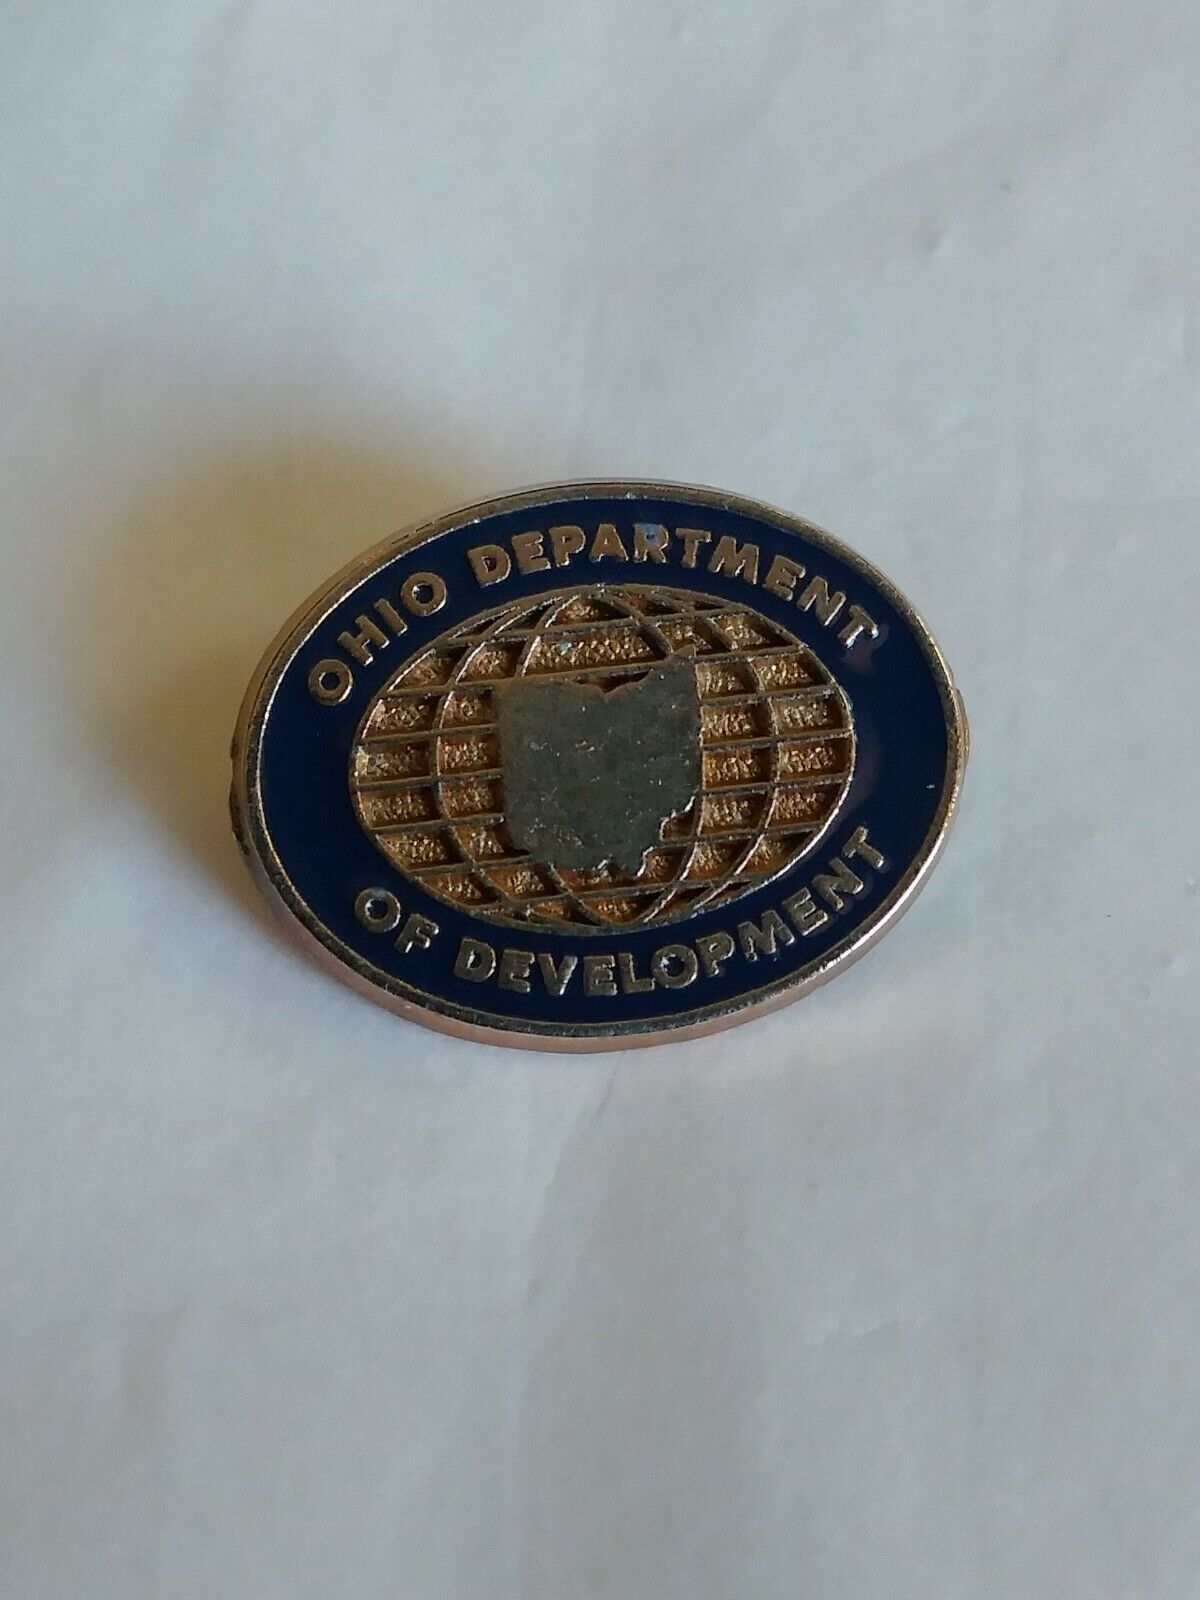 Ohio Department Of Development Employee Lapel Pin Global Business